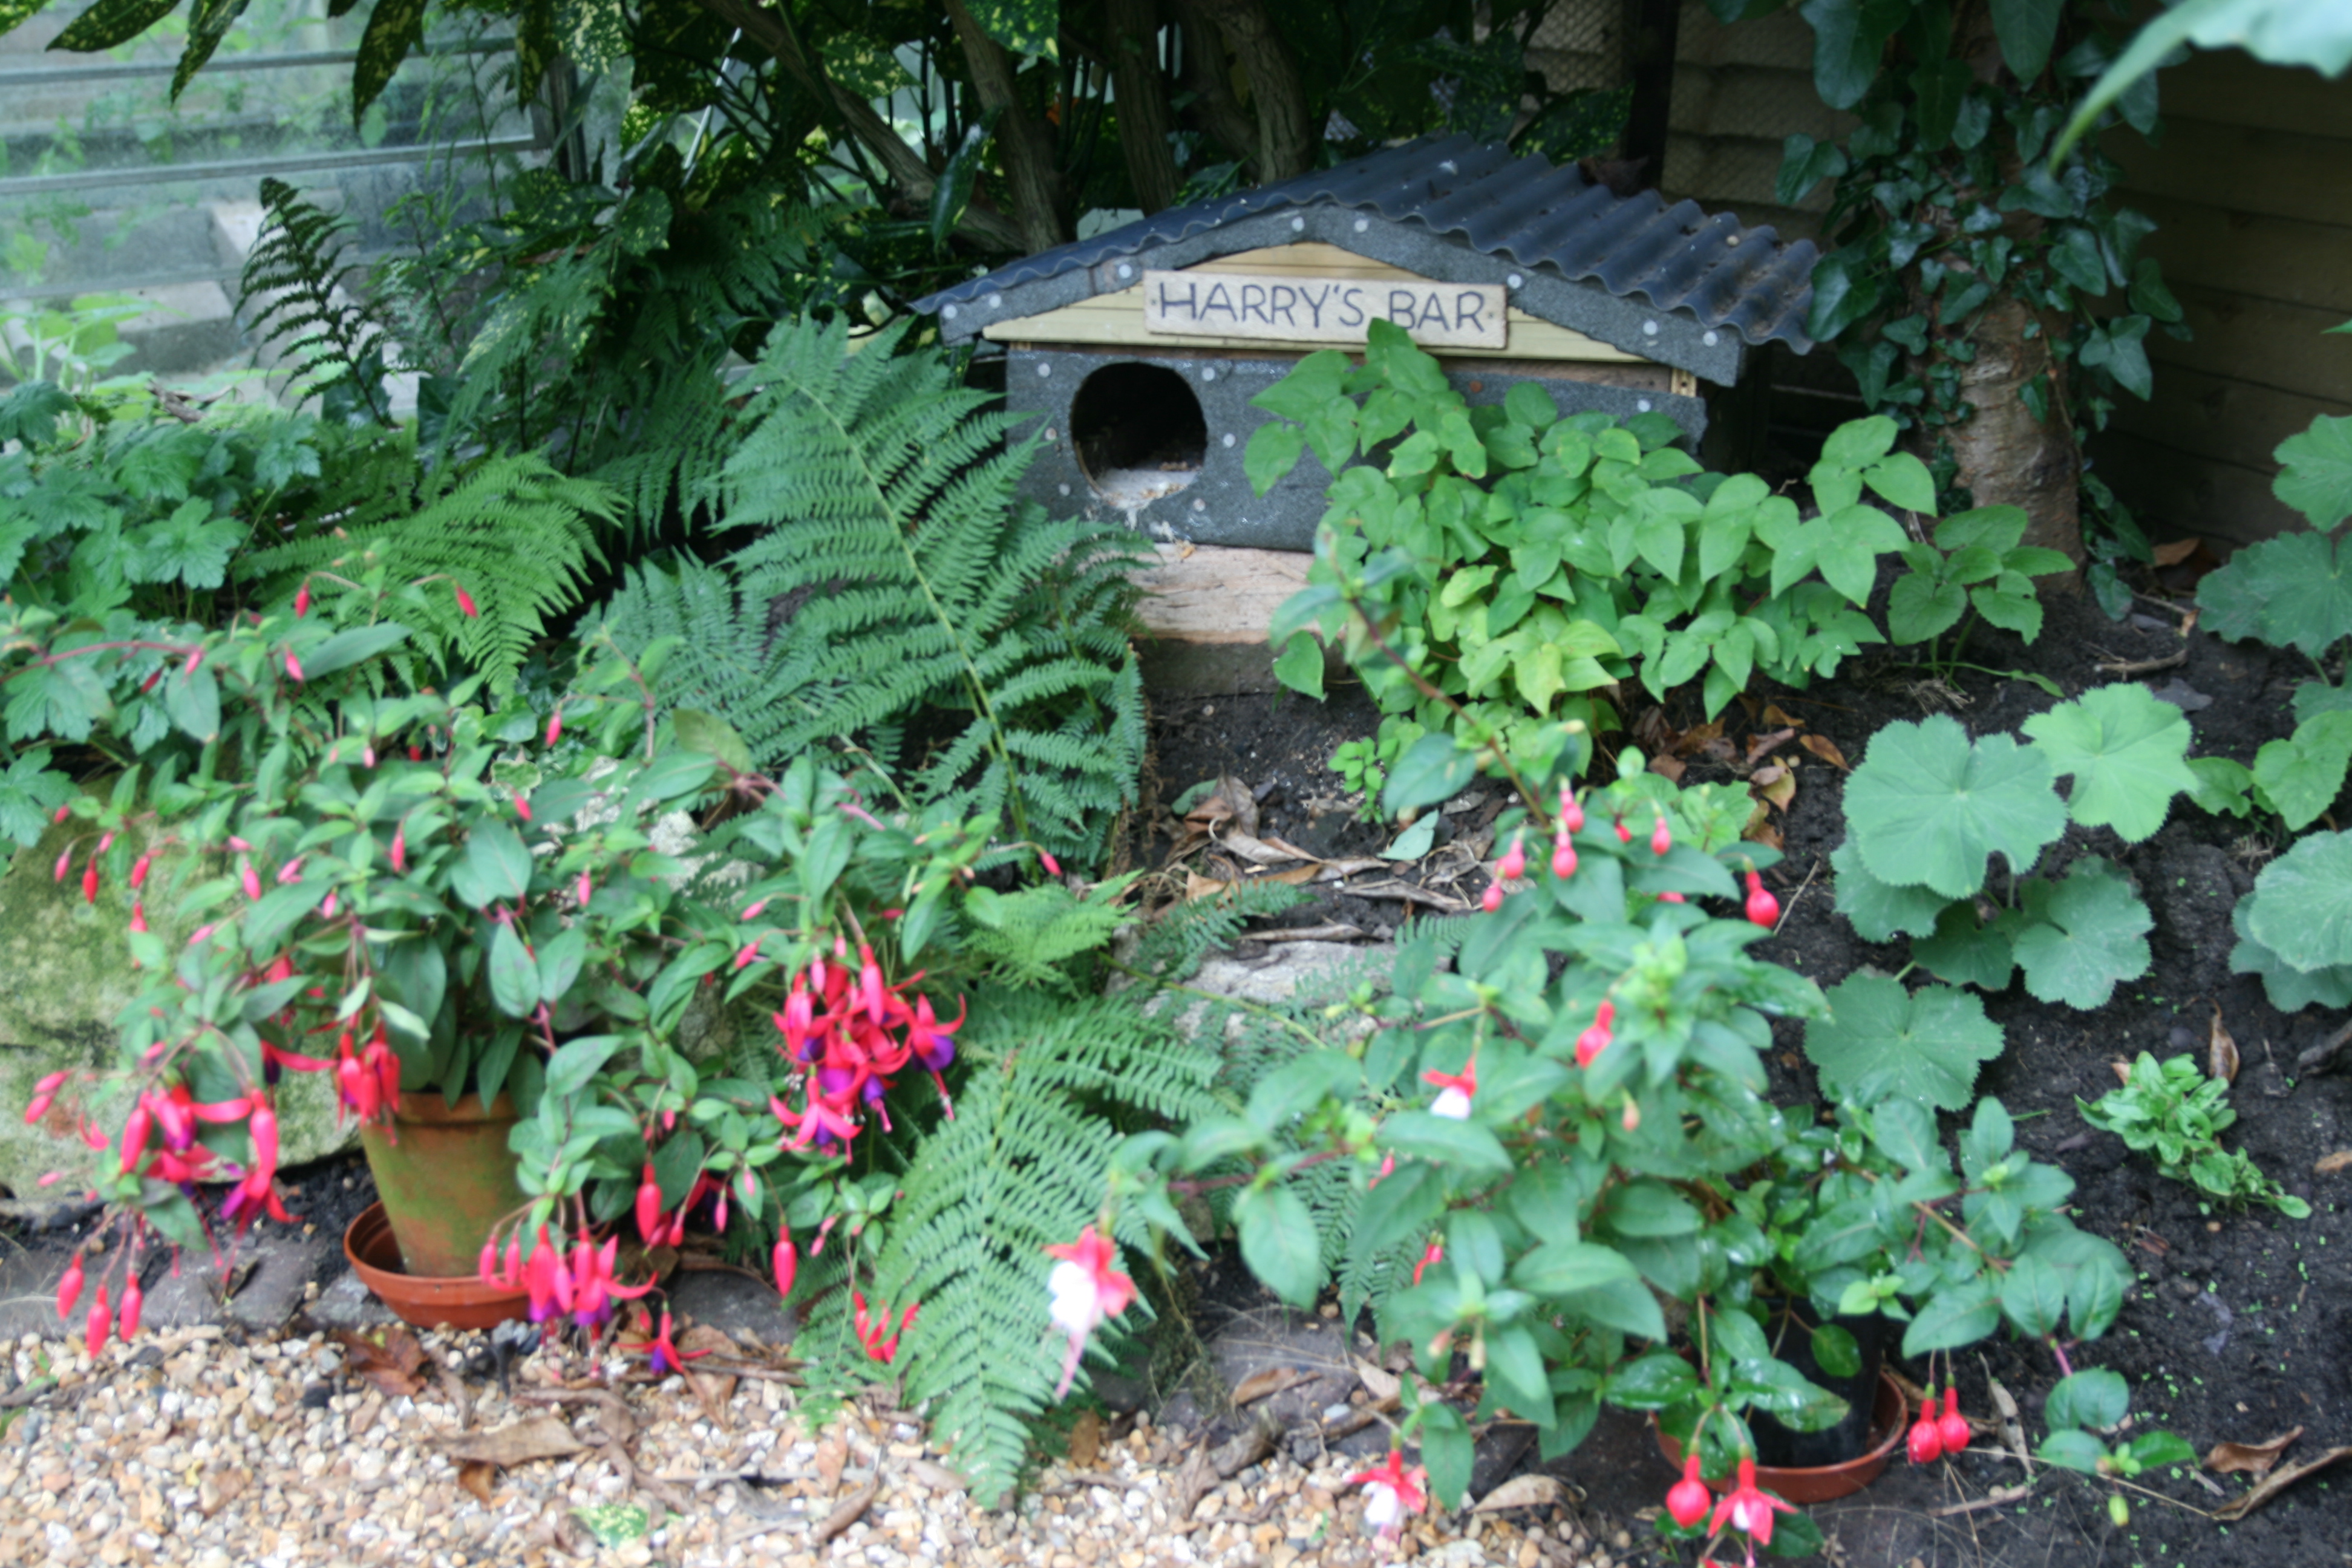 A sheltered nesting place for a hedgehog (Steve Burke/PA)